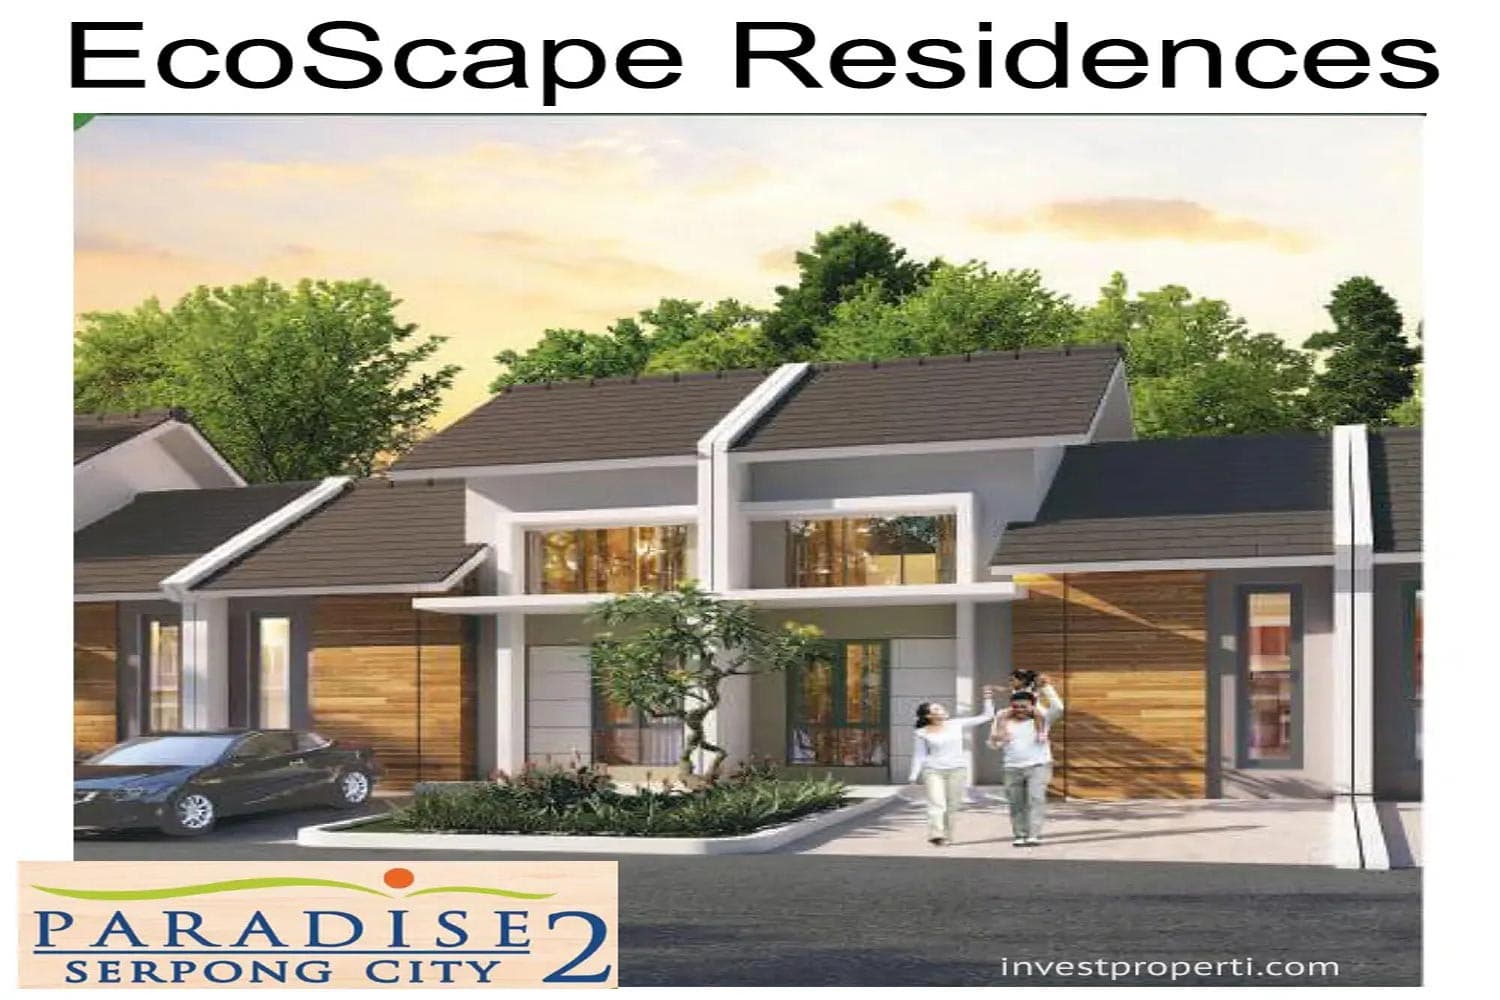 Ecoscape Residences